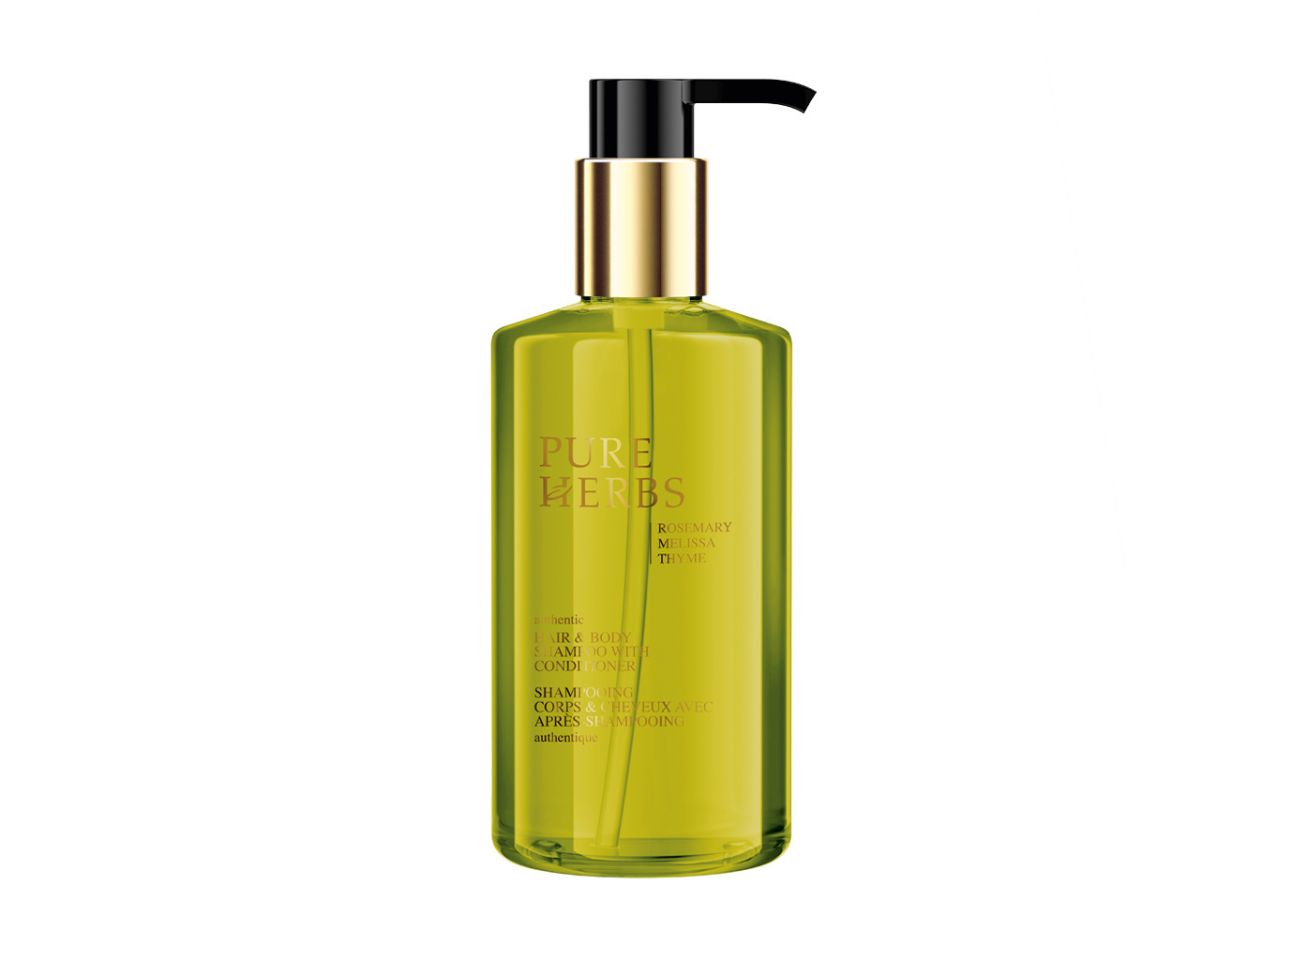 Pure Herbs Haar & Körper Shampoo - Pumpspender, 300 ml